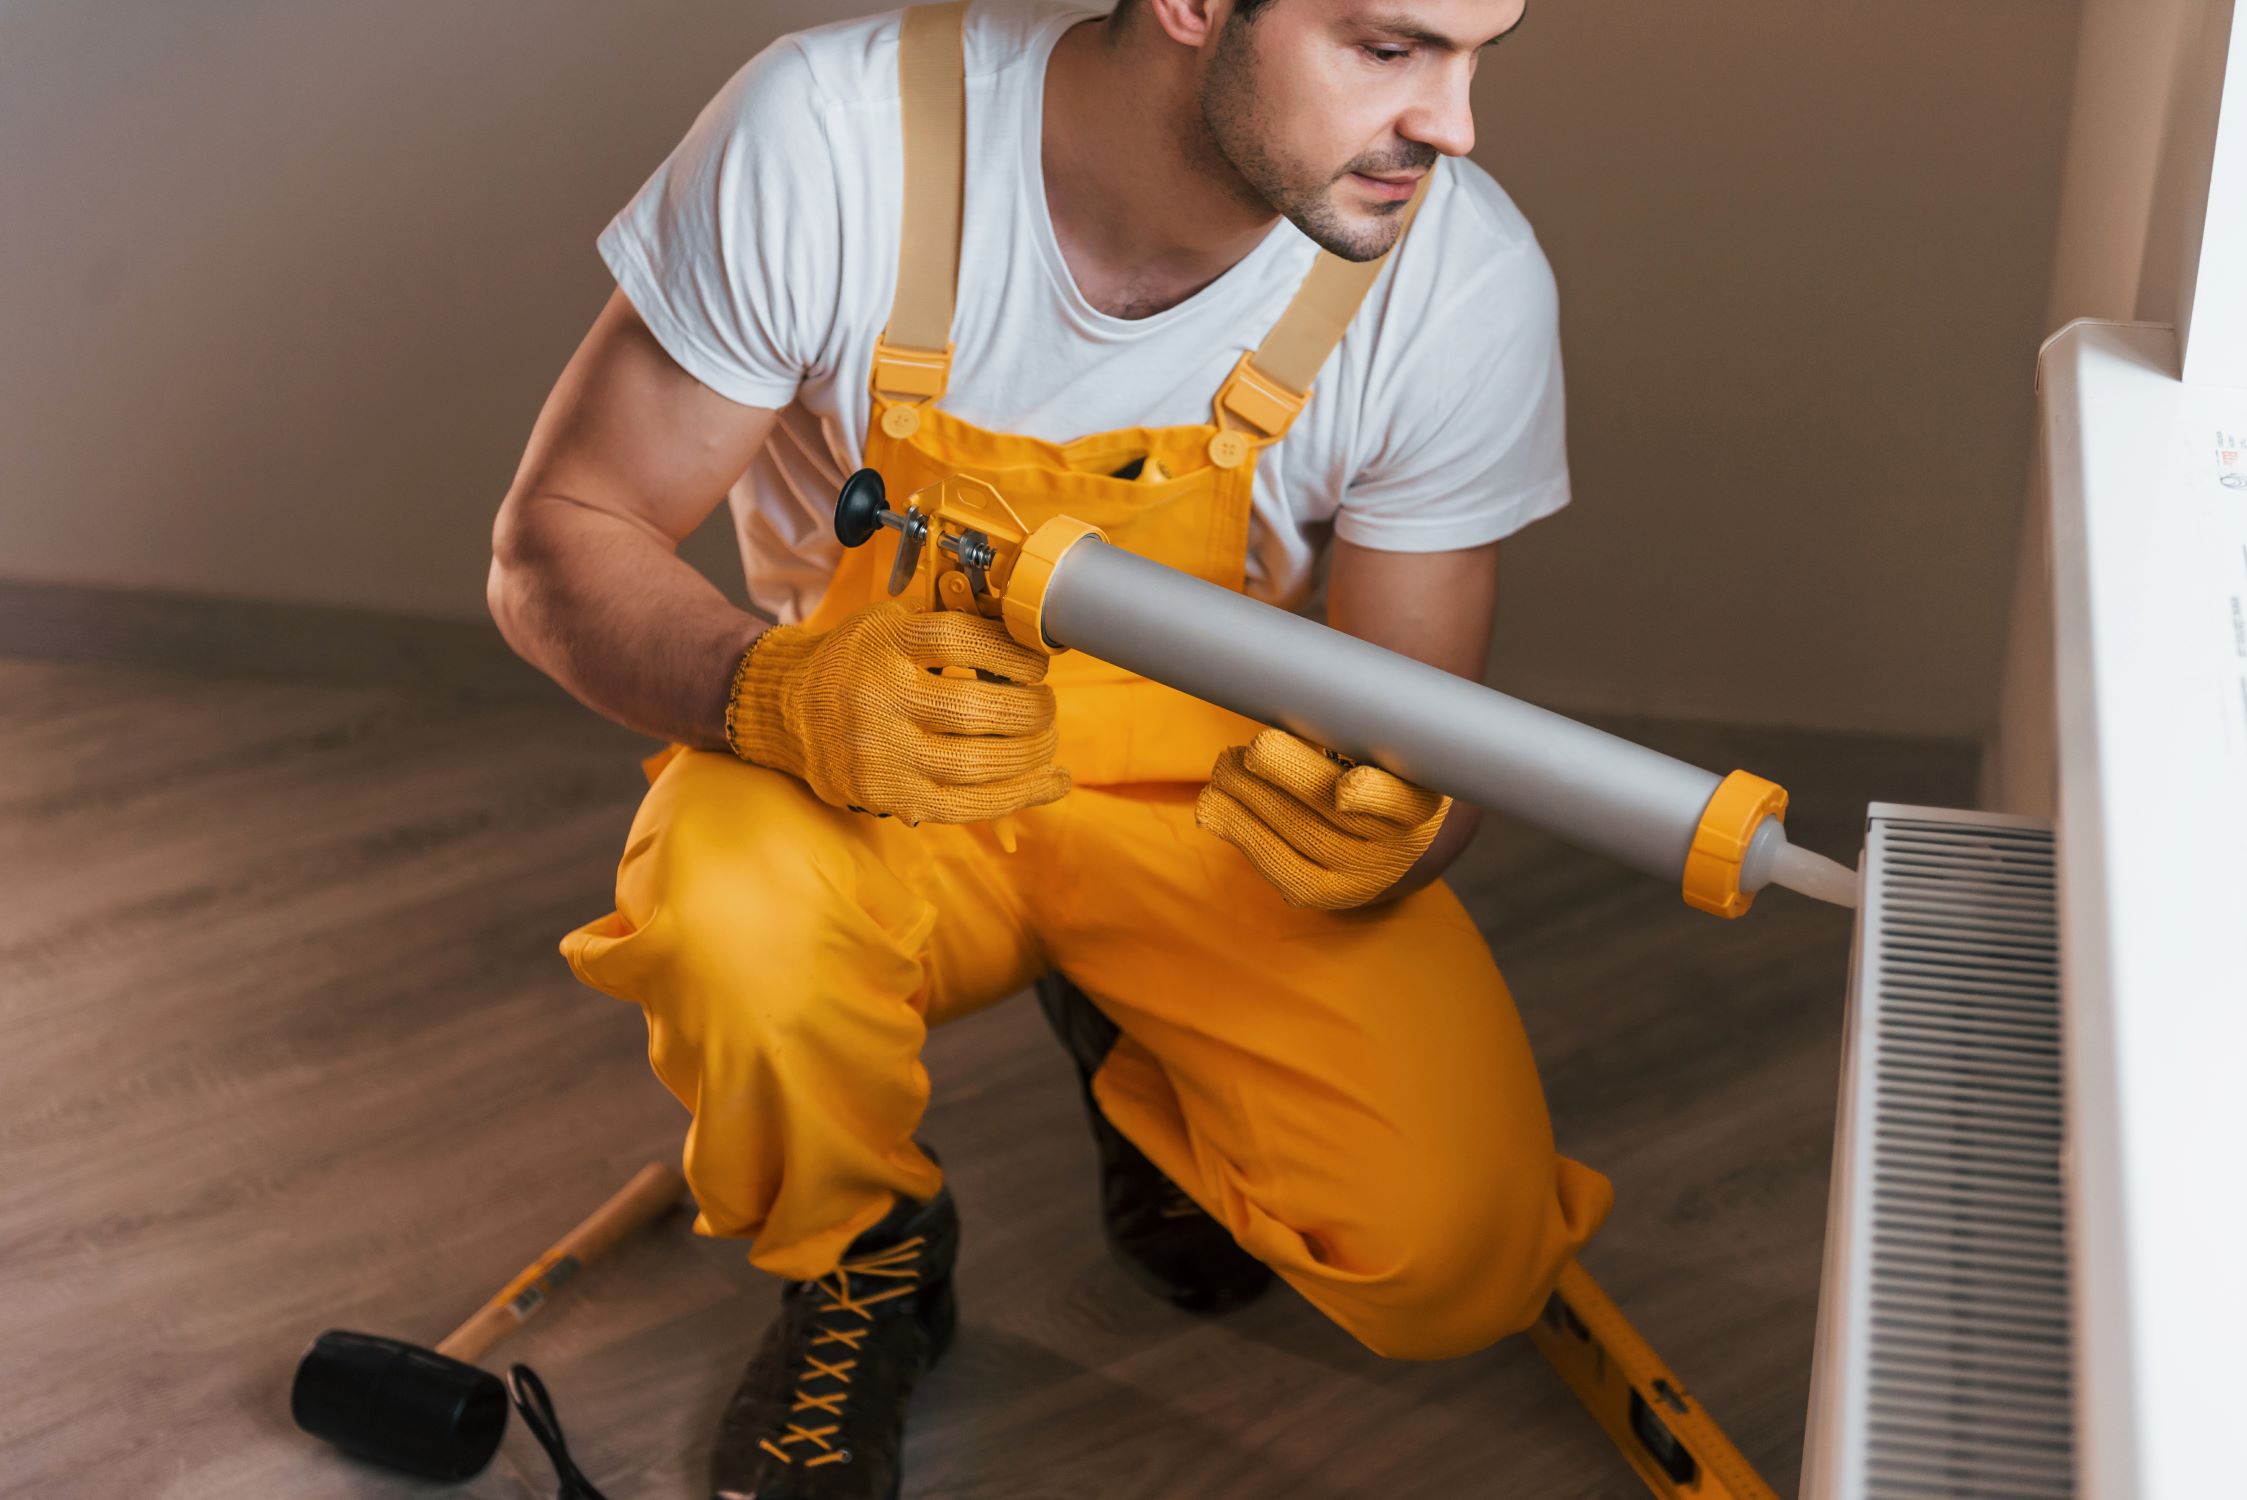 DIY Home Repairs Made Simple: A Handyman’s Guide